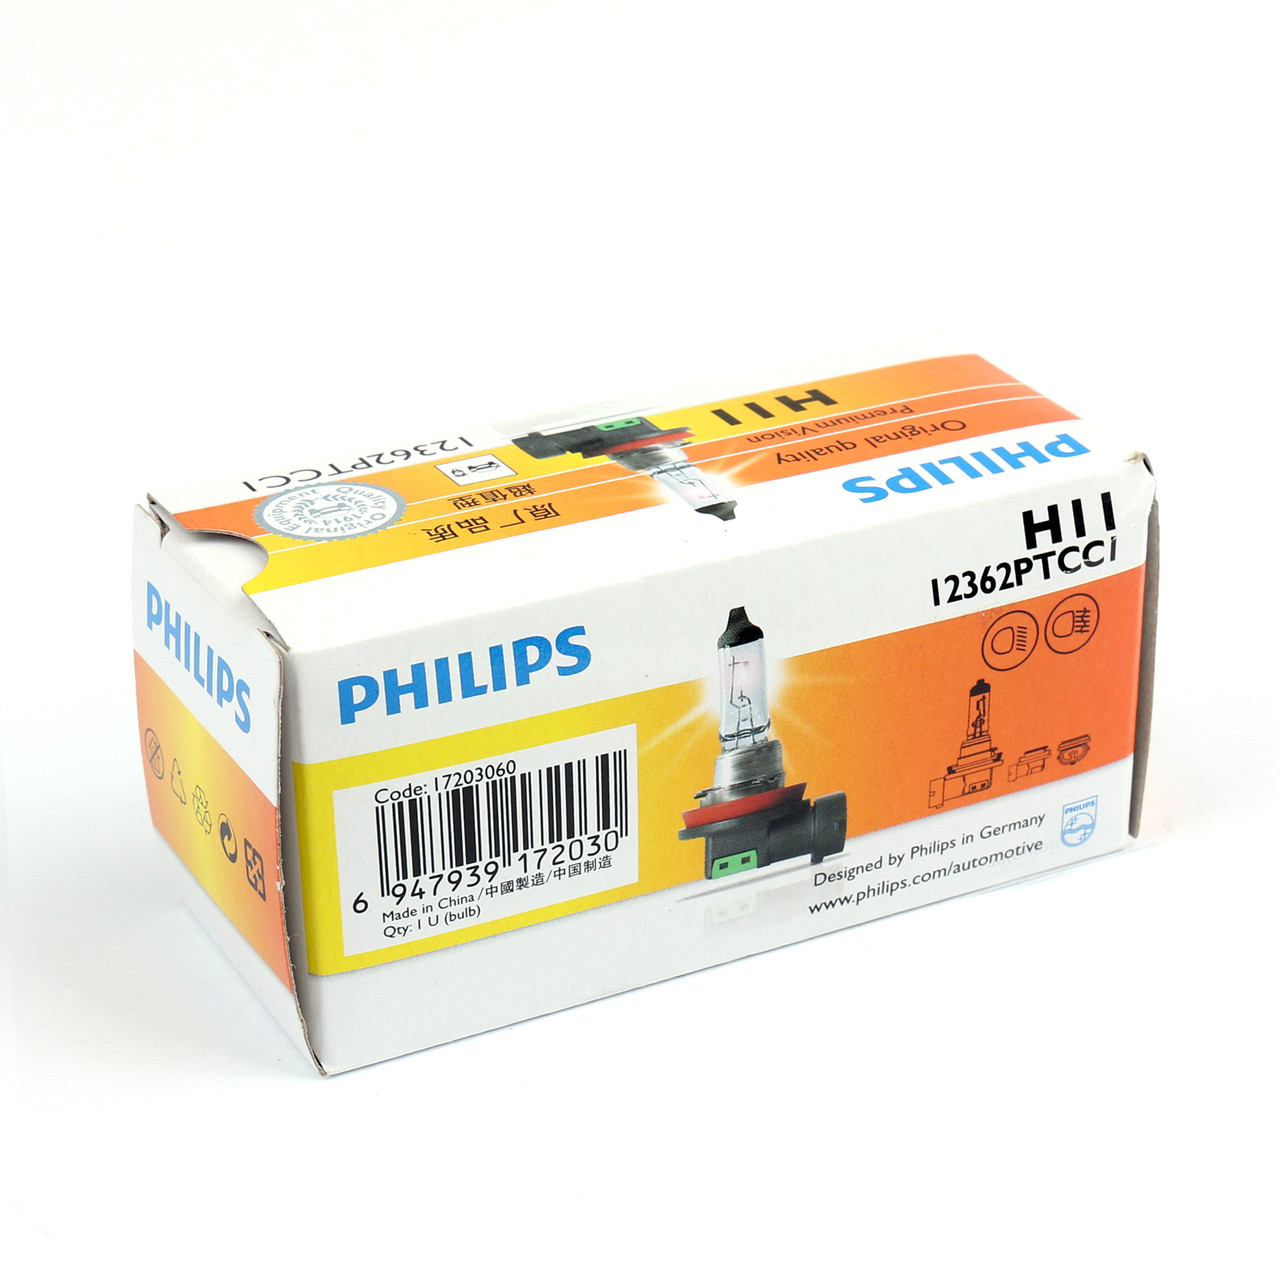 Philips Original Quality Premium Vision H11 12V 55W Halogen Bulb Signaling lamp